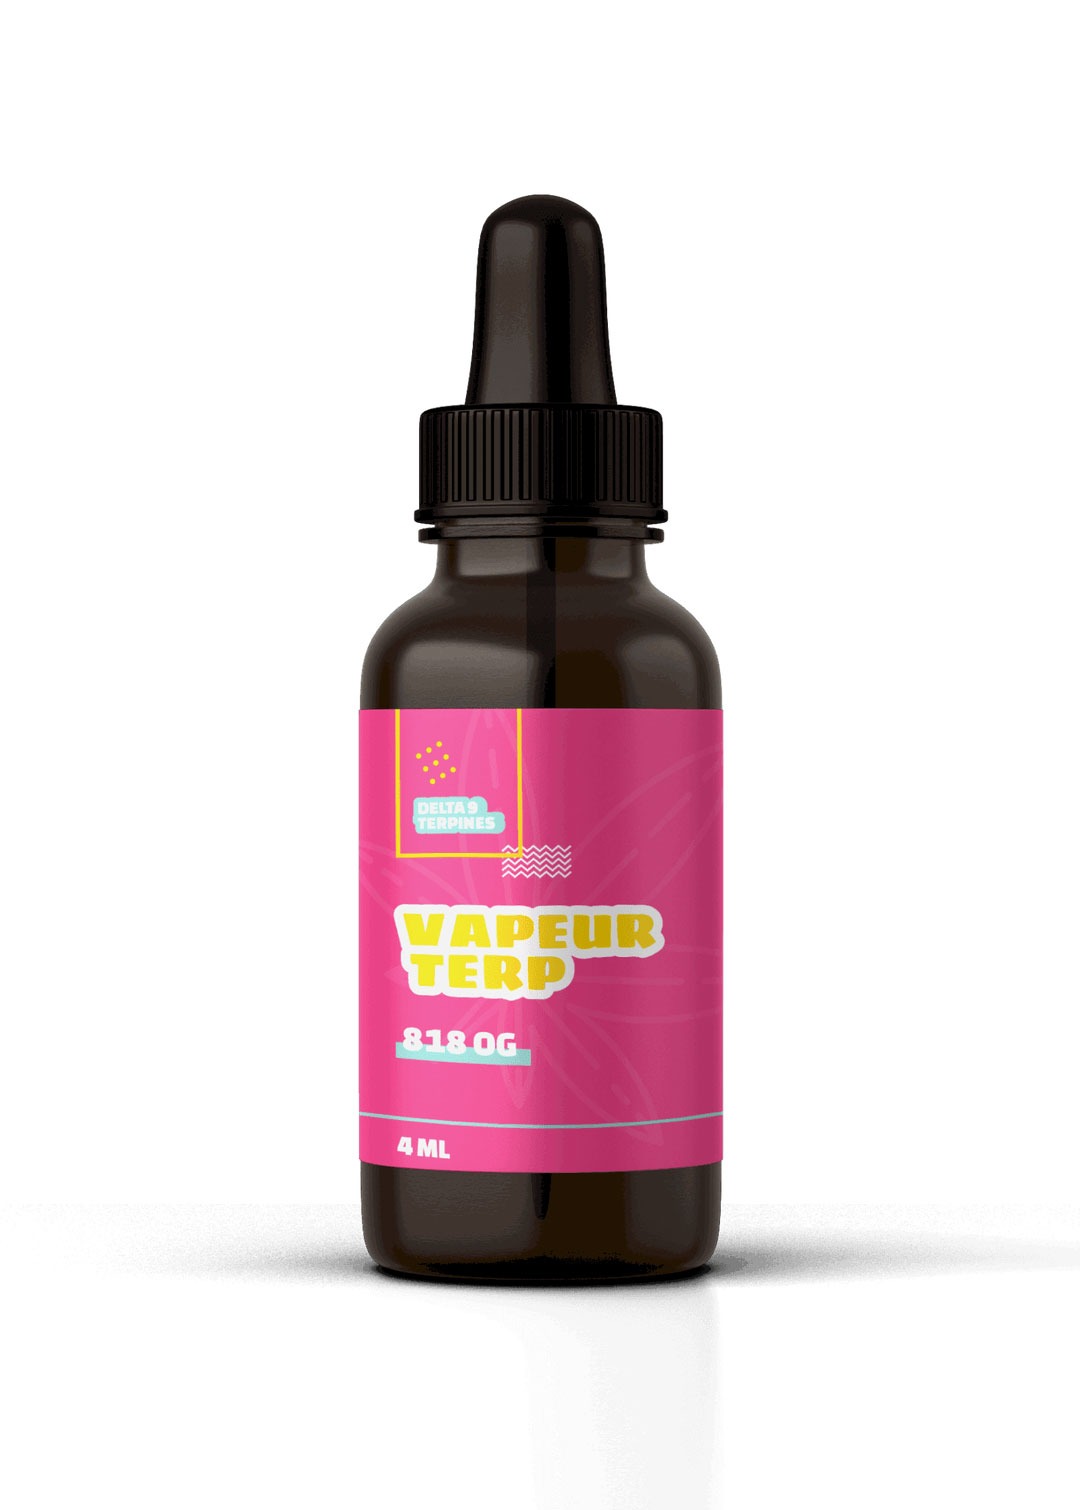 Buy 818 OG E-Liquid Cannabis Terpenes Online From Vapeur Terp